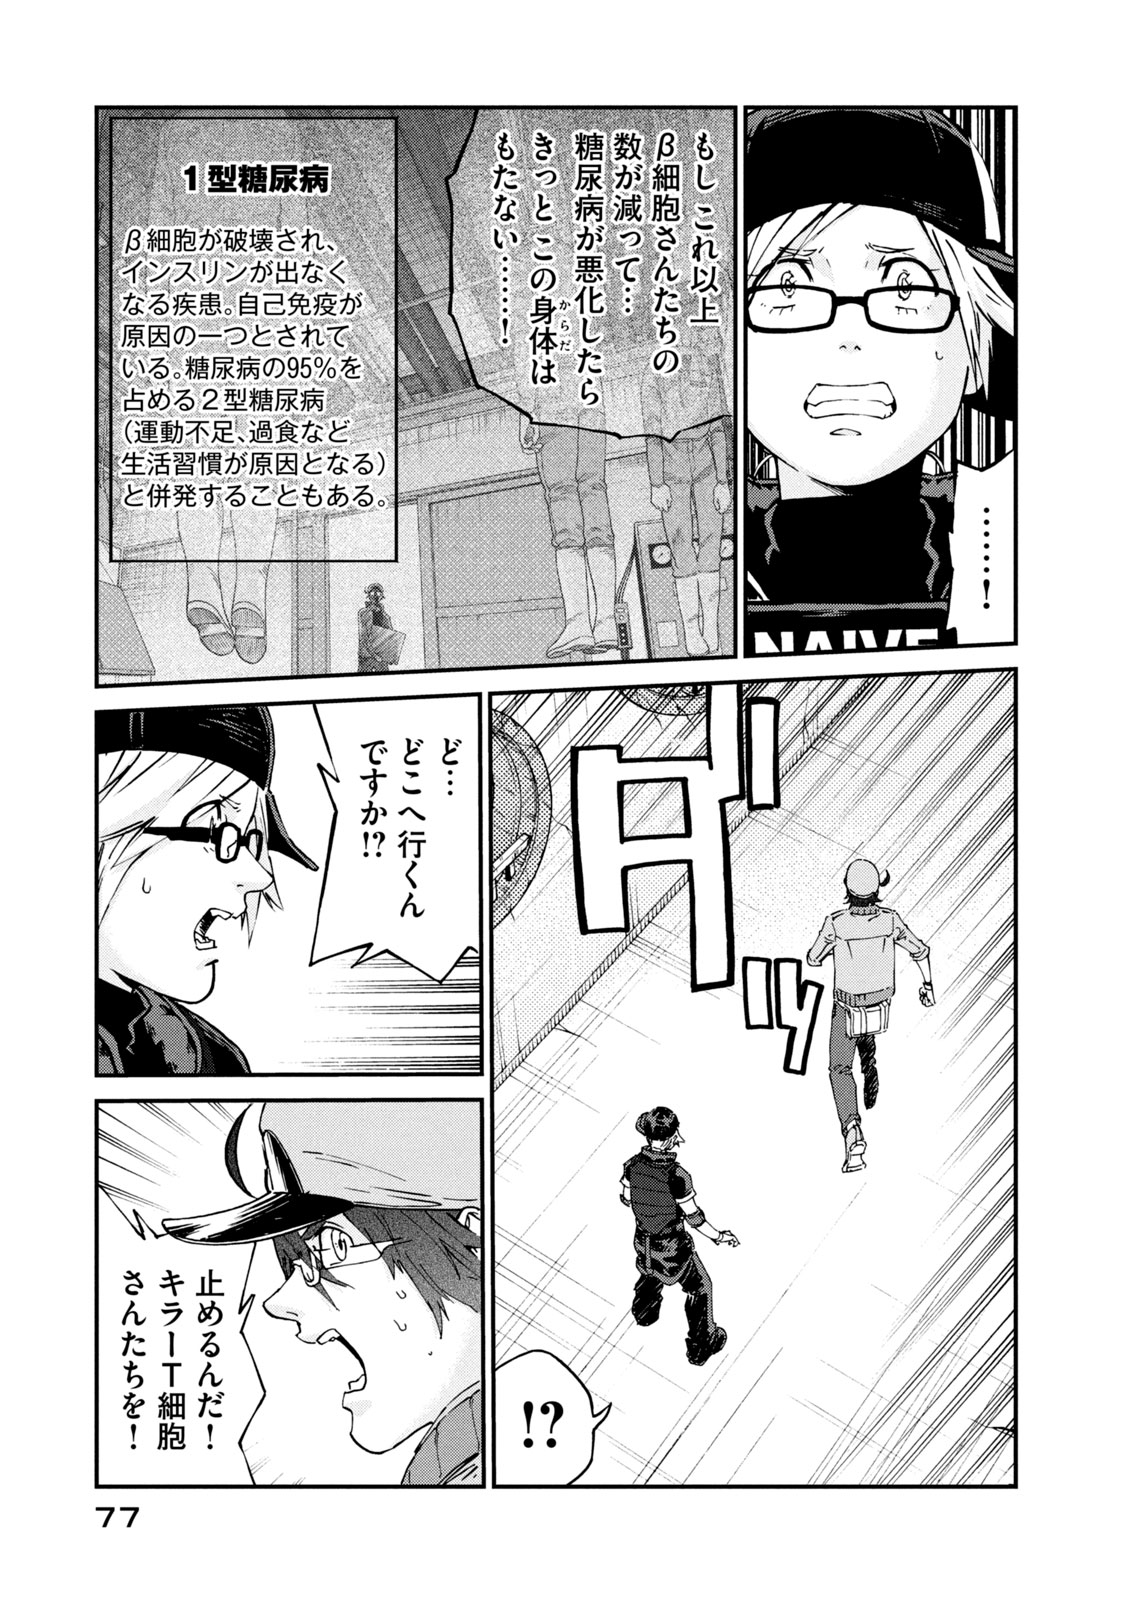 Hataraku Saibou BLACK - Chapter 45 - Page 13